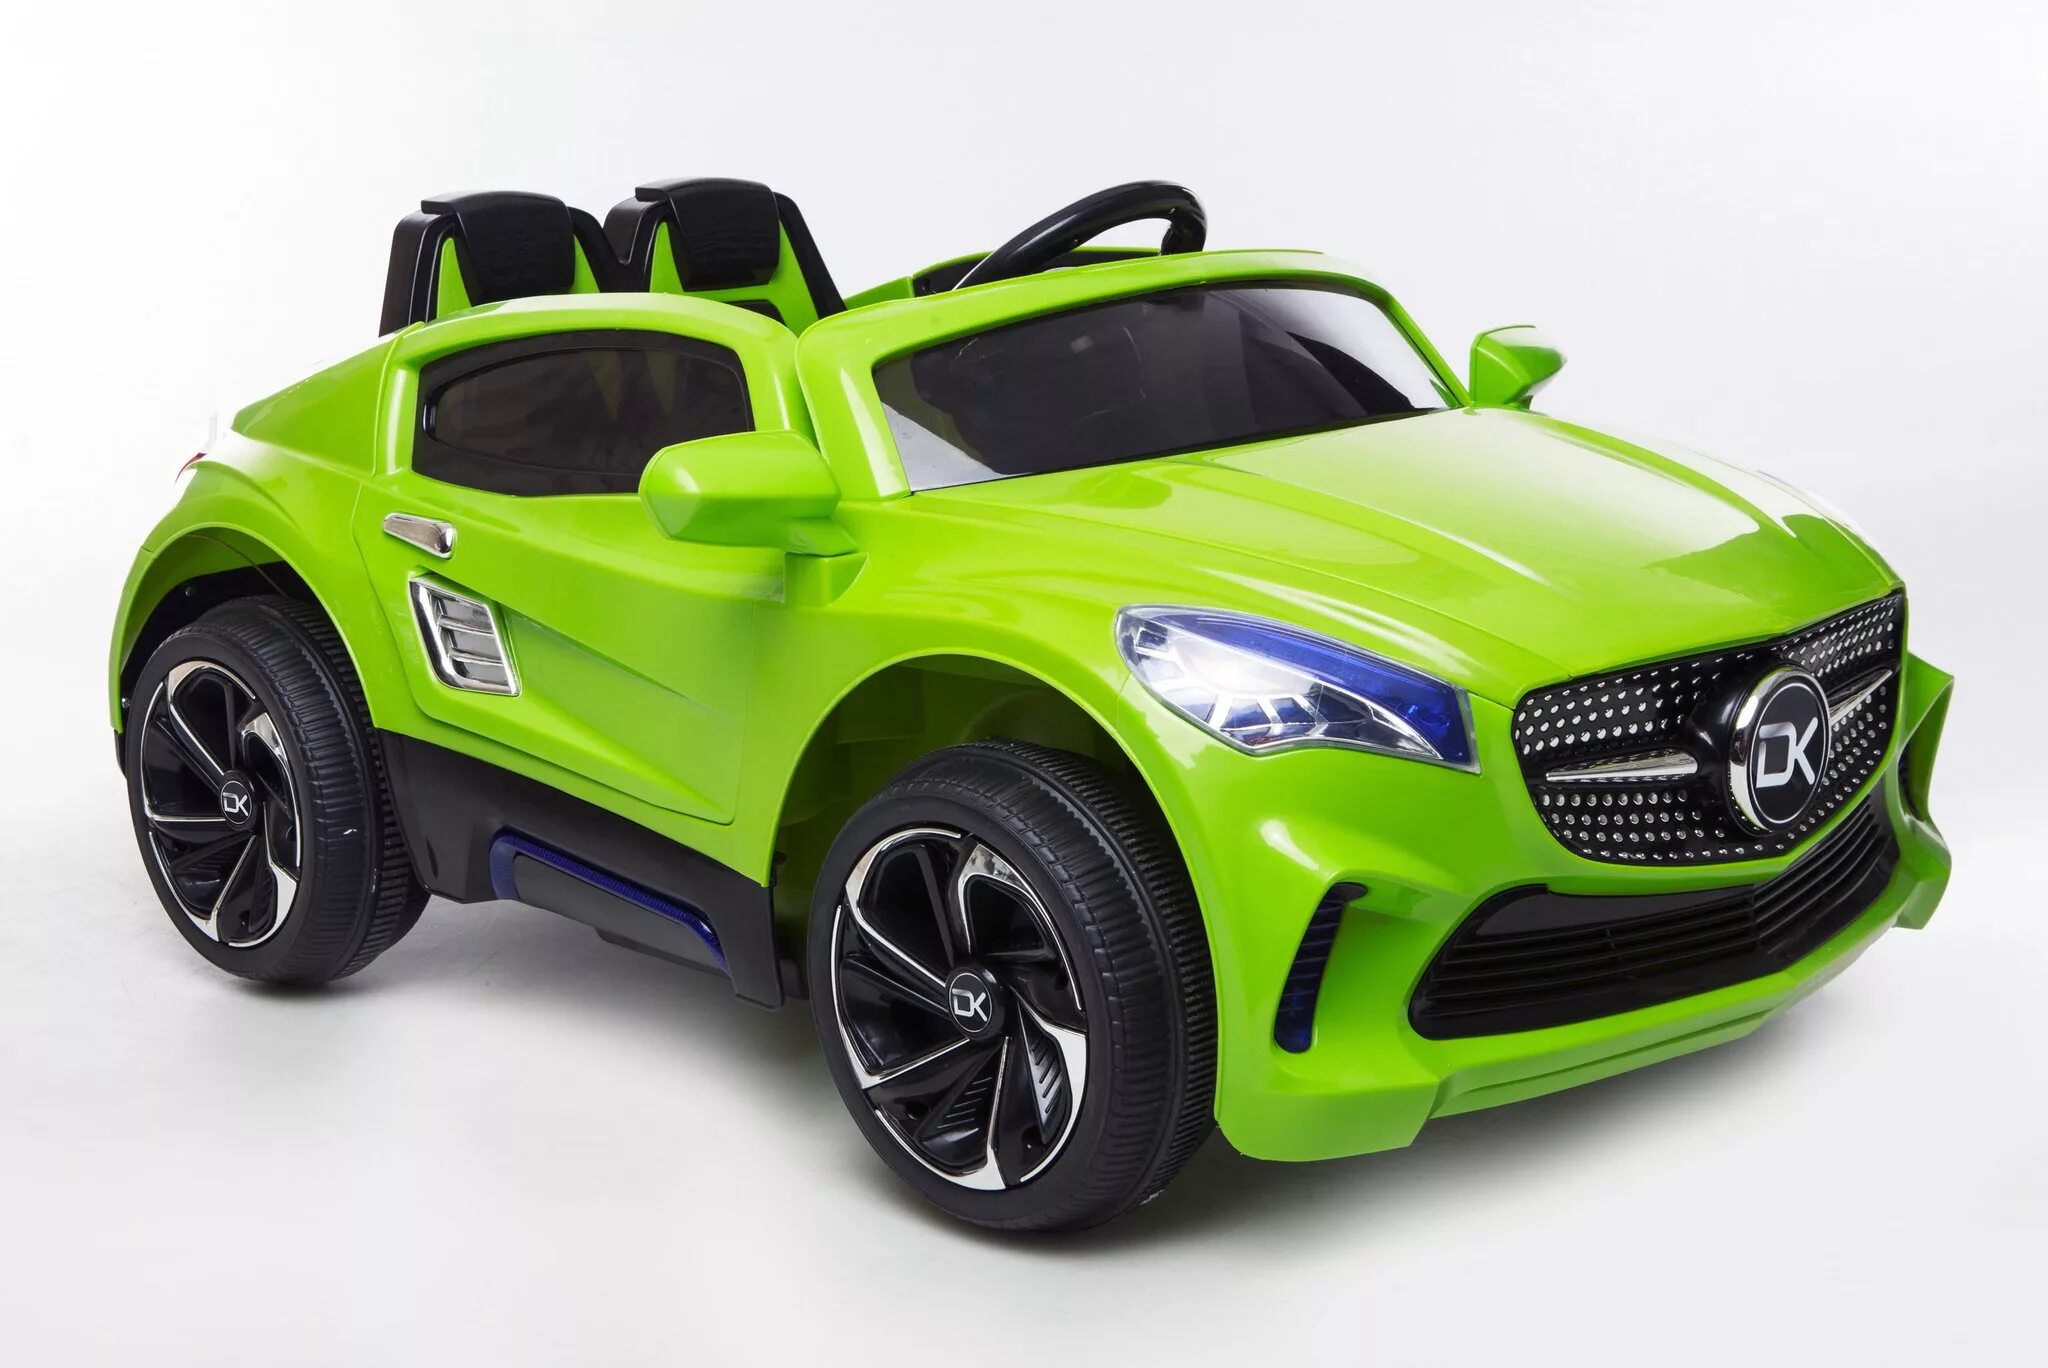 Toys toys машина. Cars игрушки. Игрушка Toy cars. Green Toy car. Car Toys for Kids.